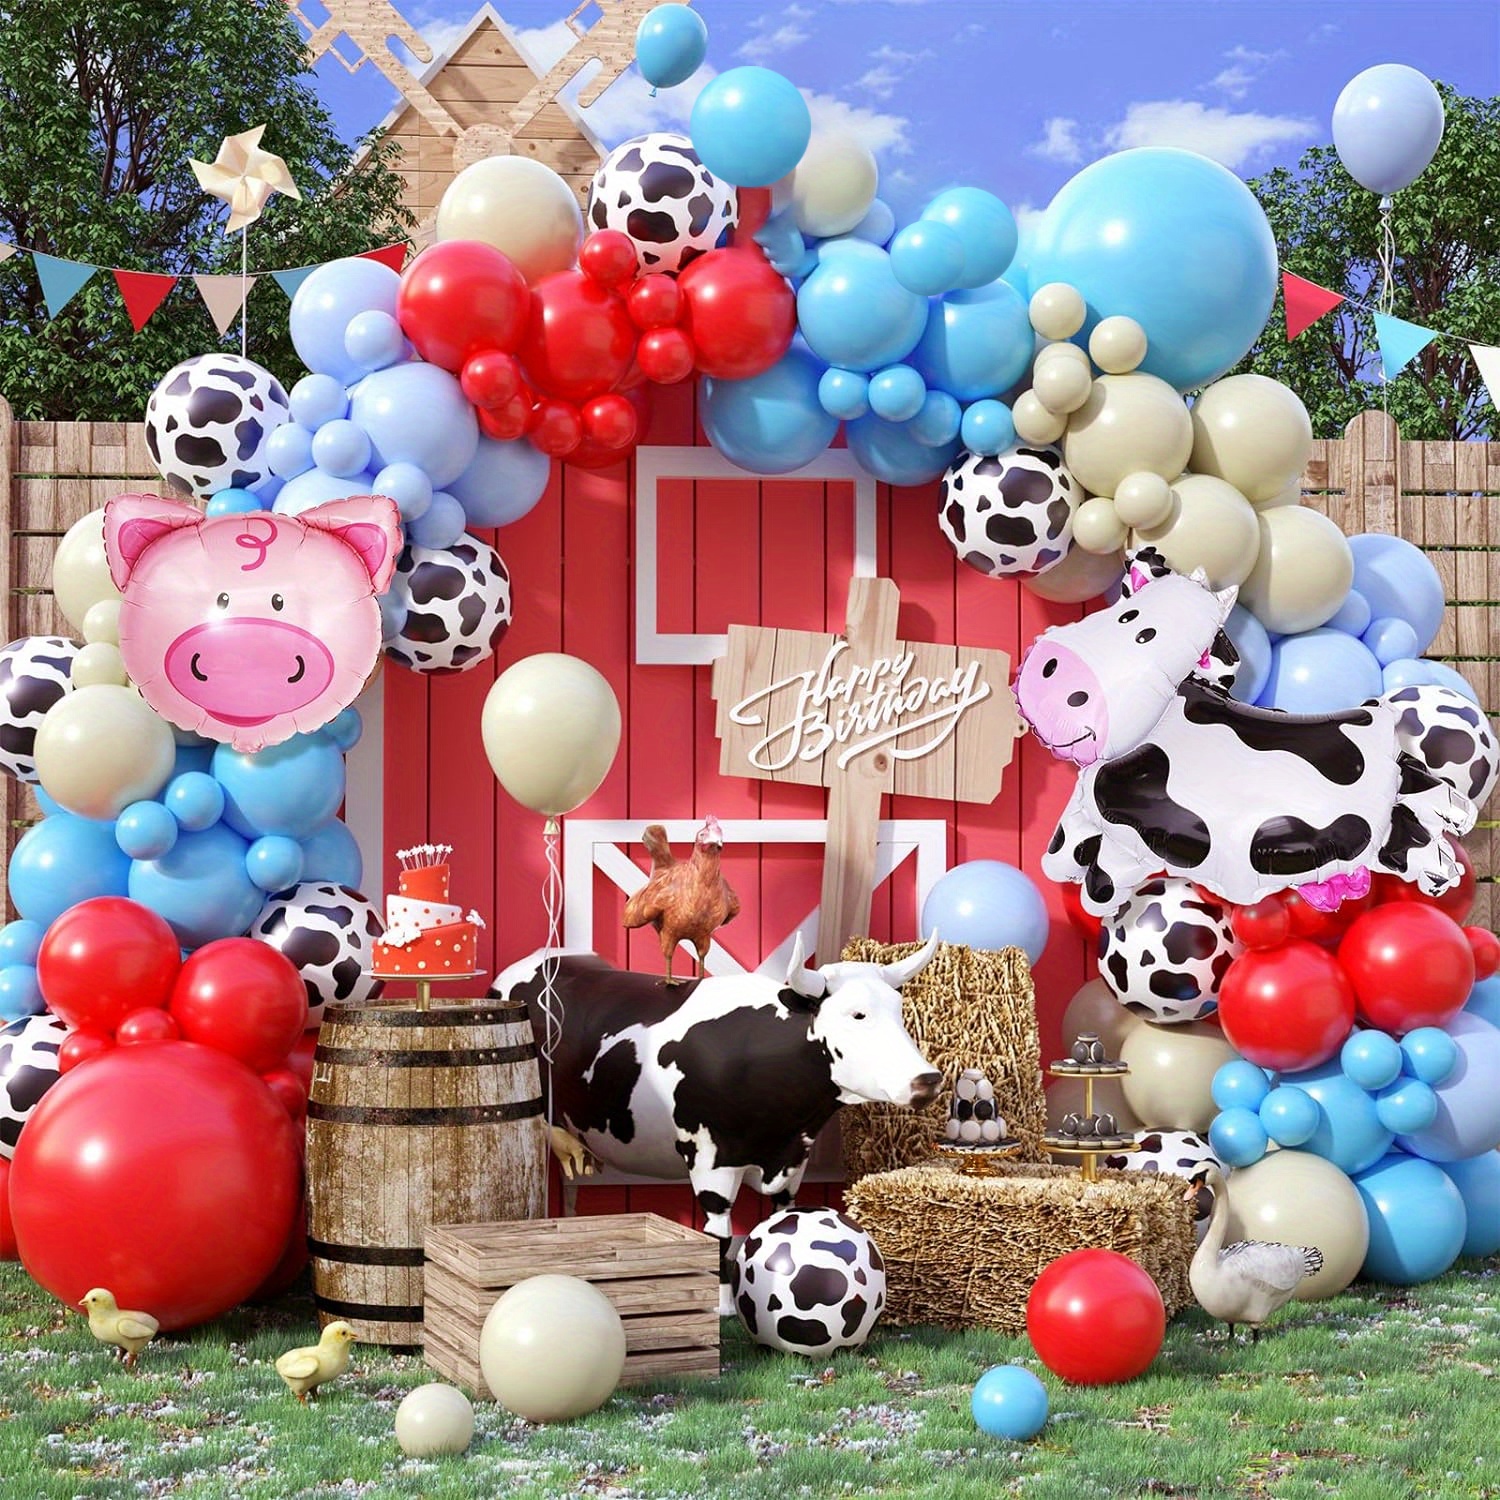 

110pcs, Red Maka Blue Farm Animal Theme Balloon Garland Arch Kit With Farm Animal Print Balloons For Birthday Farm Theme Party Birthday Party Decoration Supplies